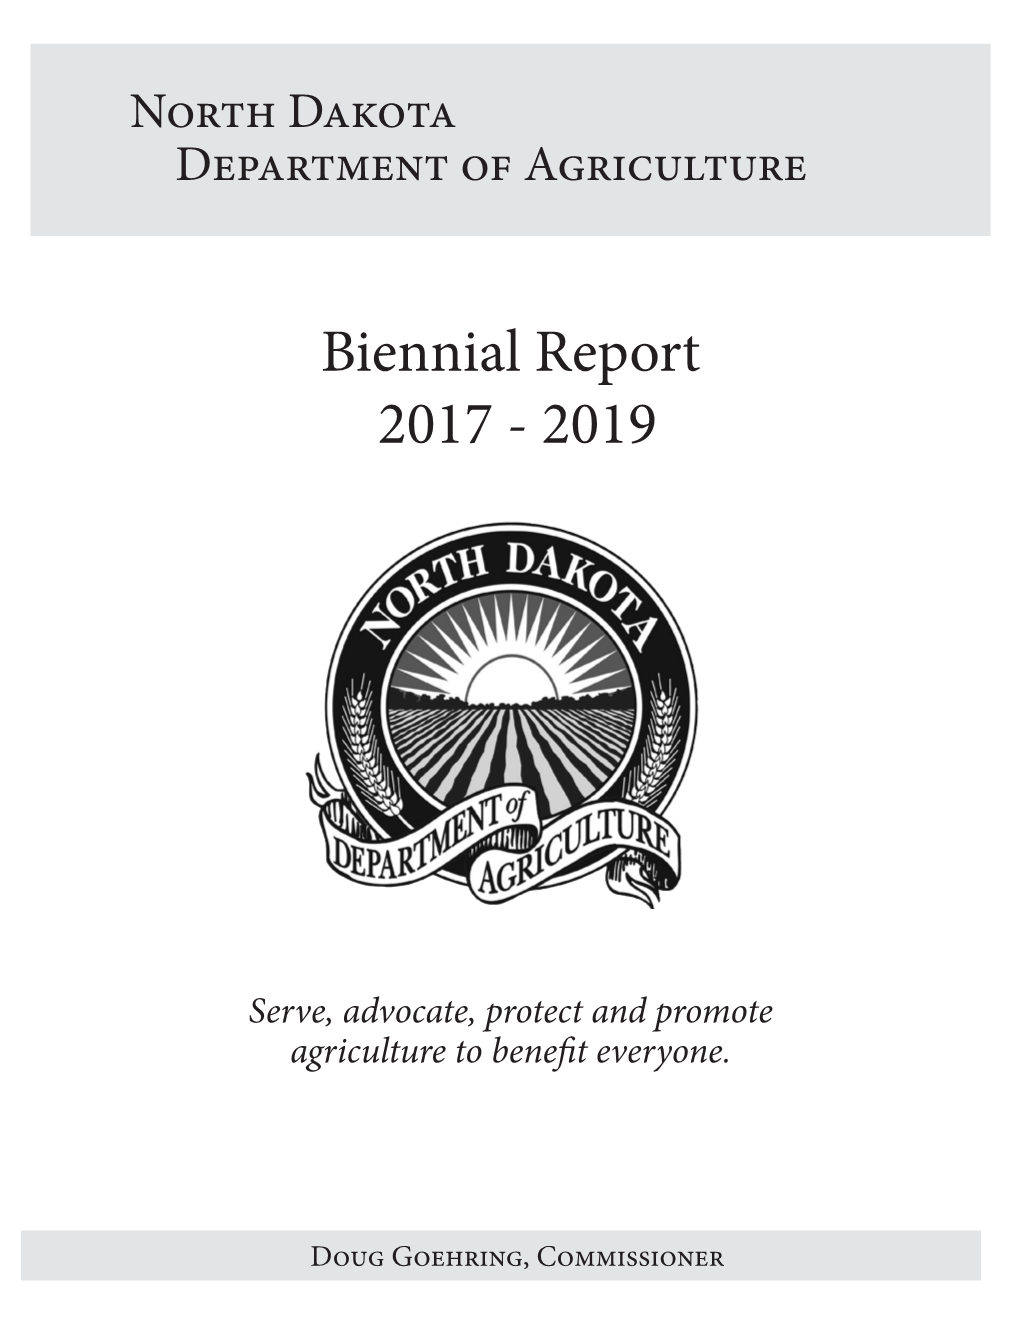 Biennial Report 2017 - 2019